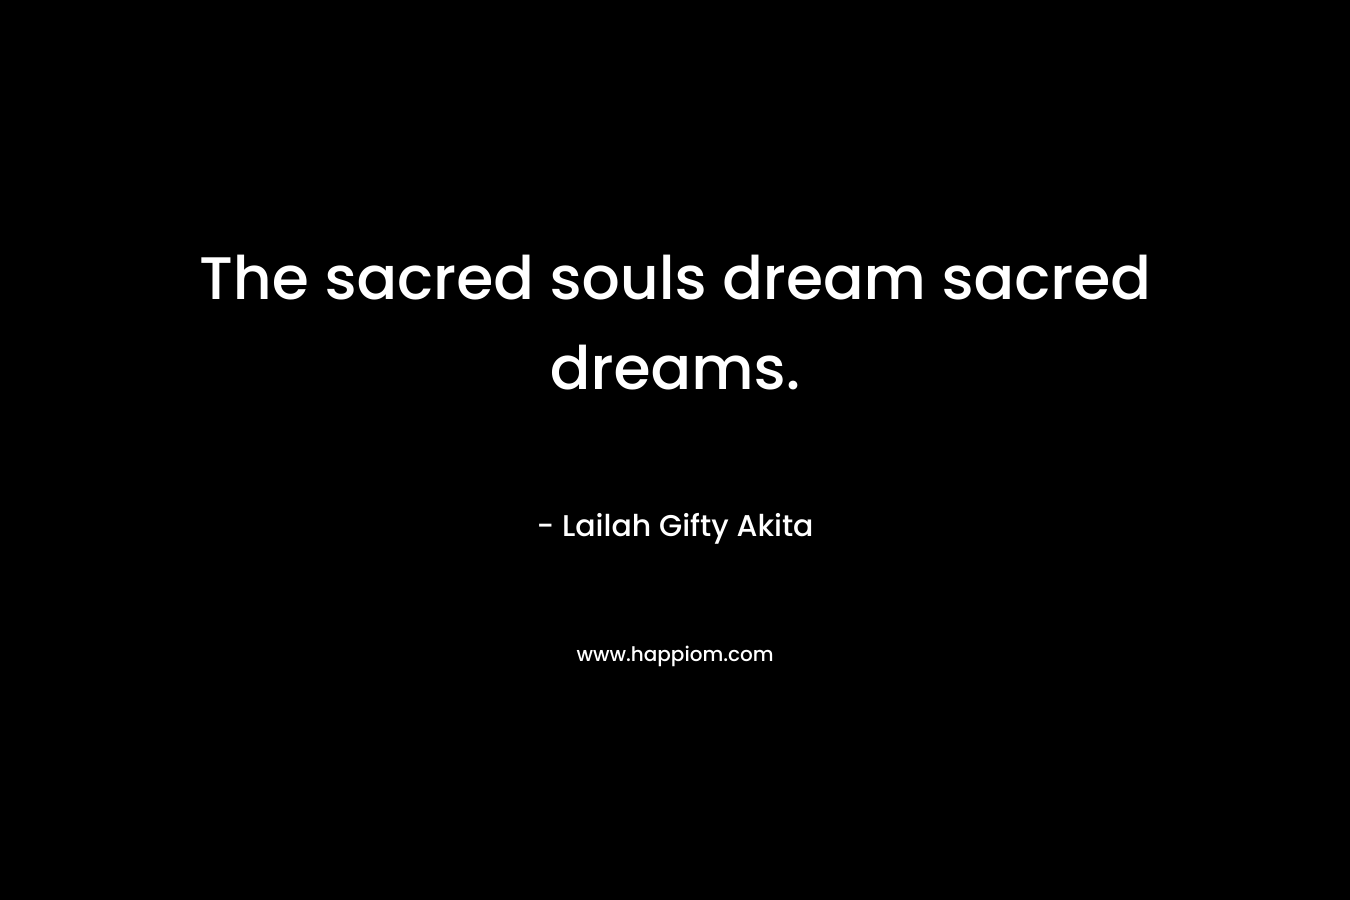 The sacred souls dream sacred dreams.